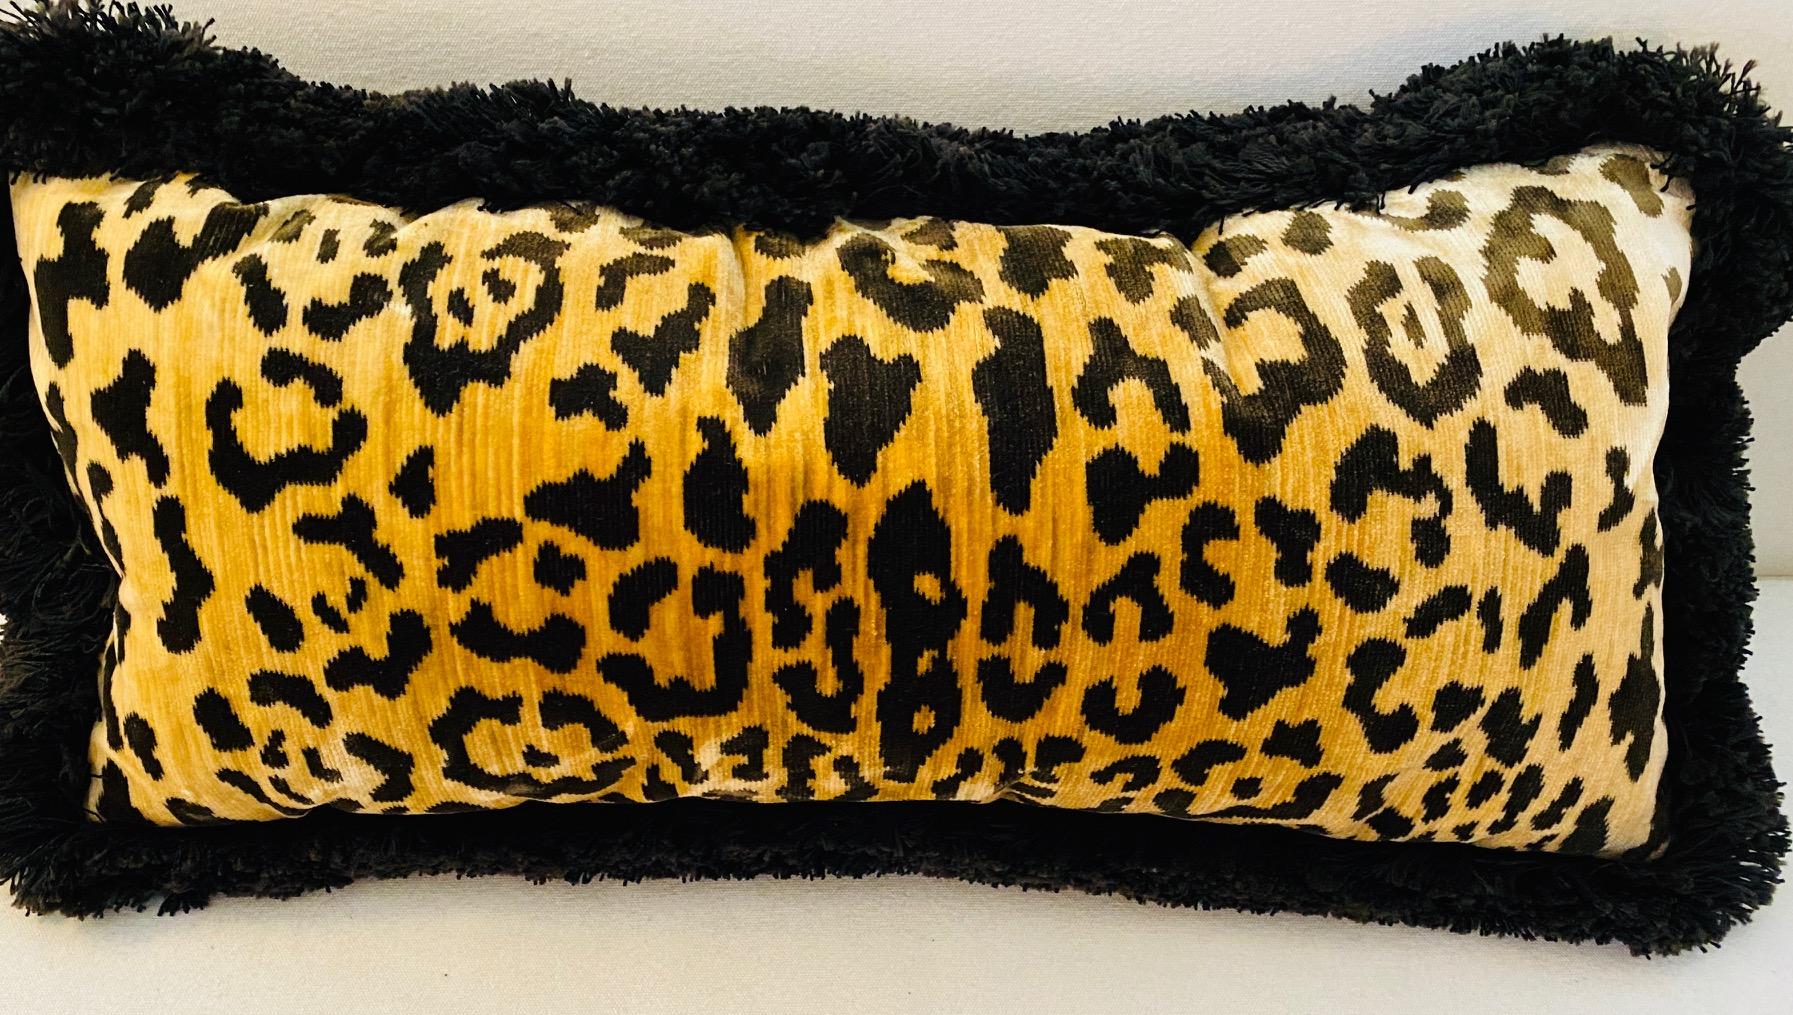 Decorative pair of leopard velvet lumbar cushions with black brush fringe.
Measures: 22